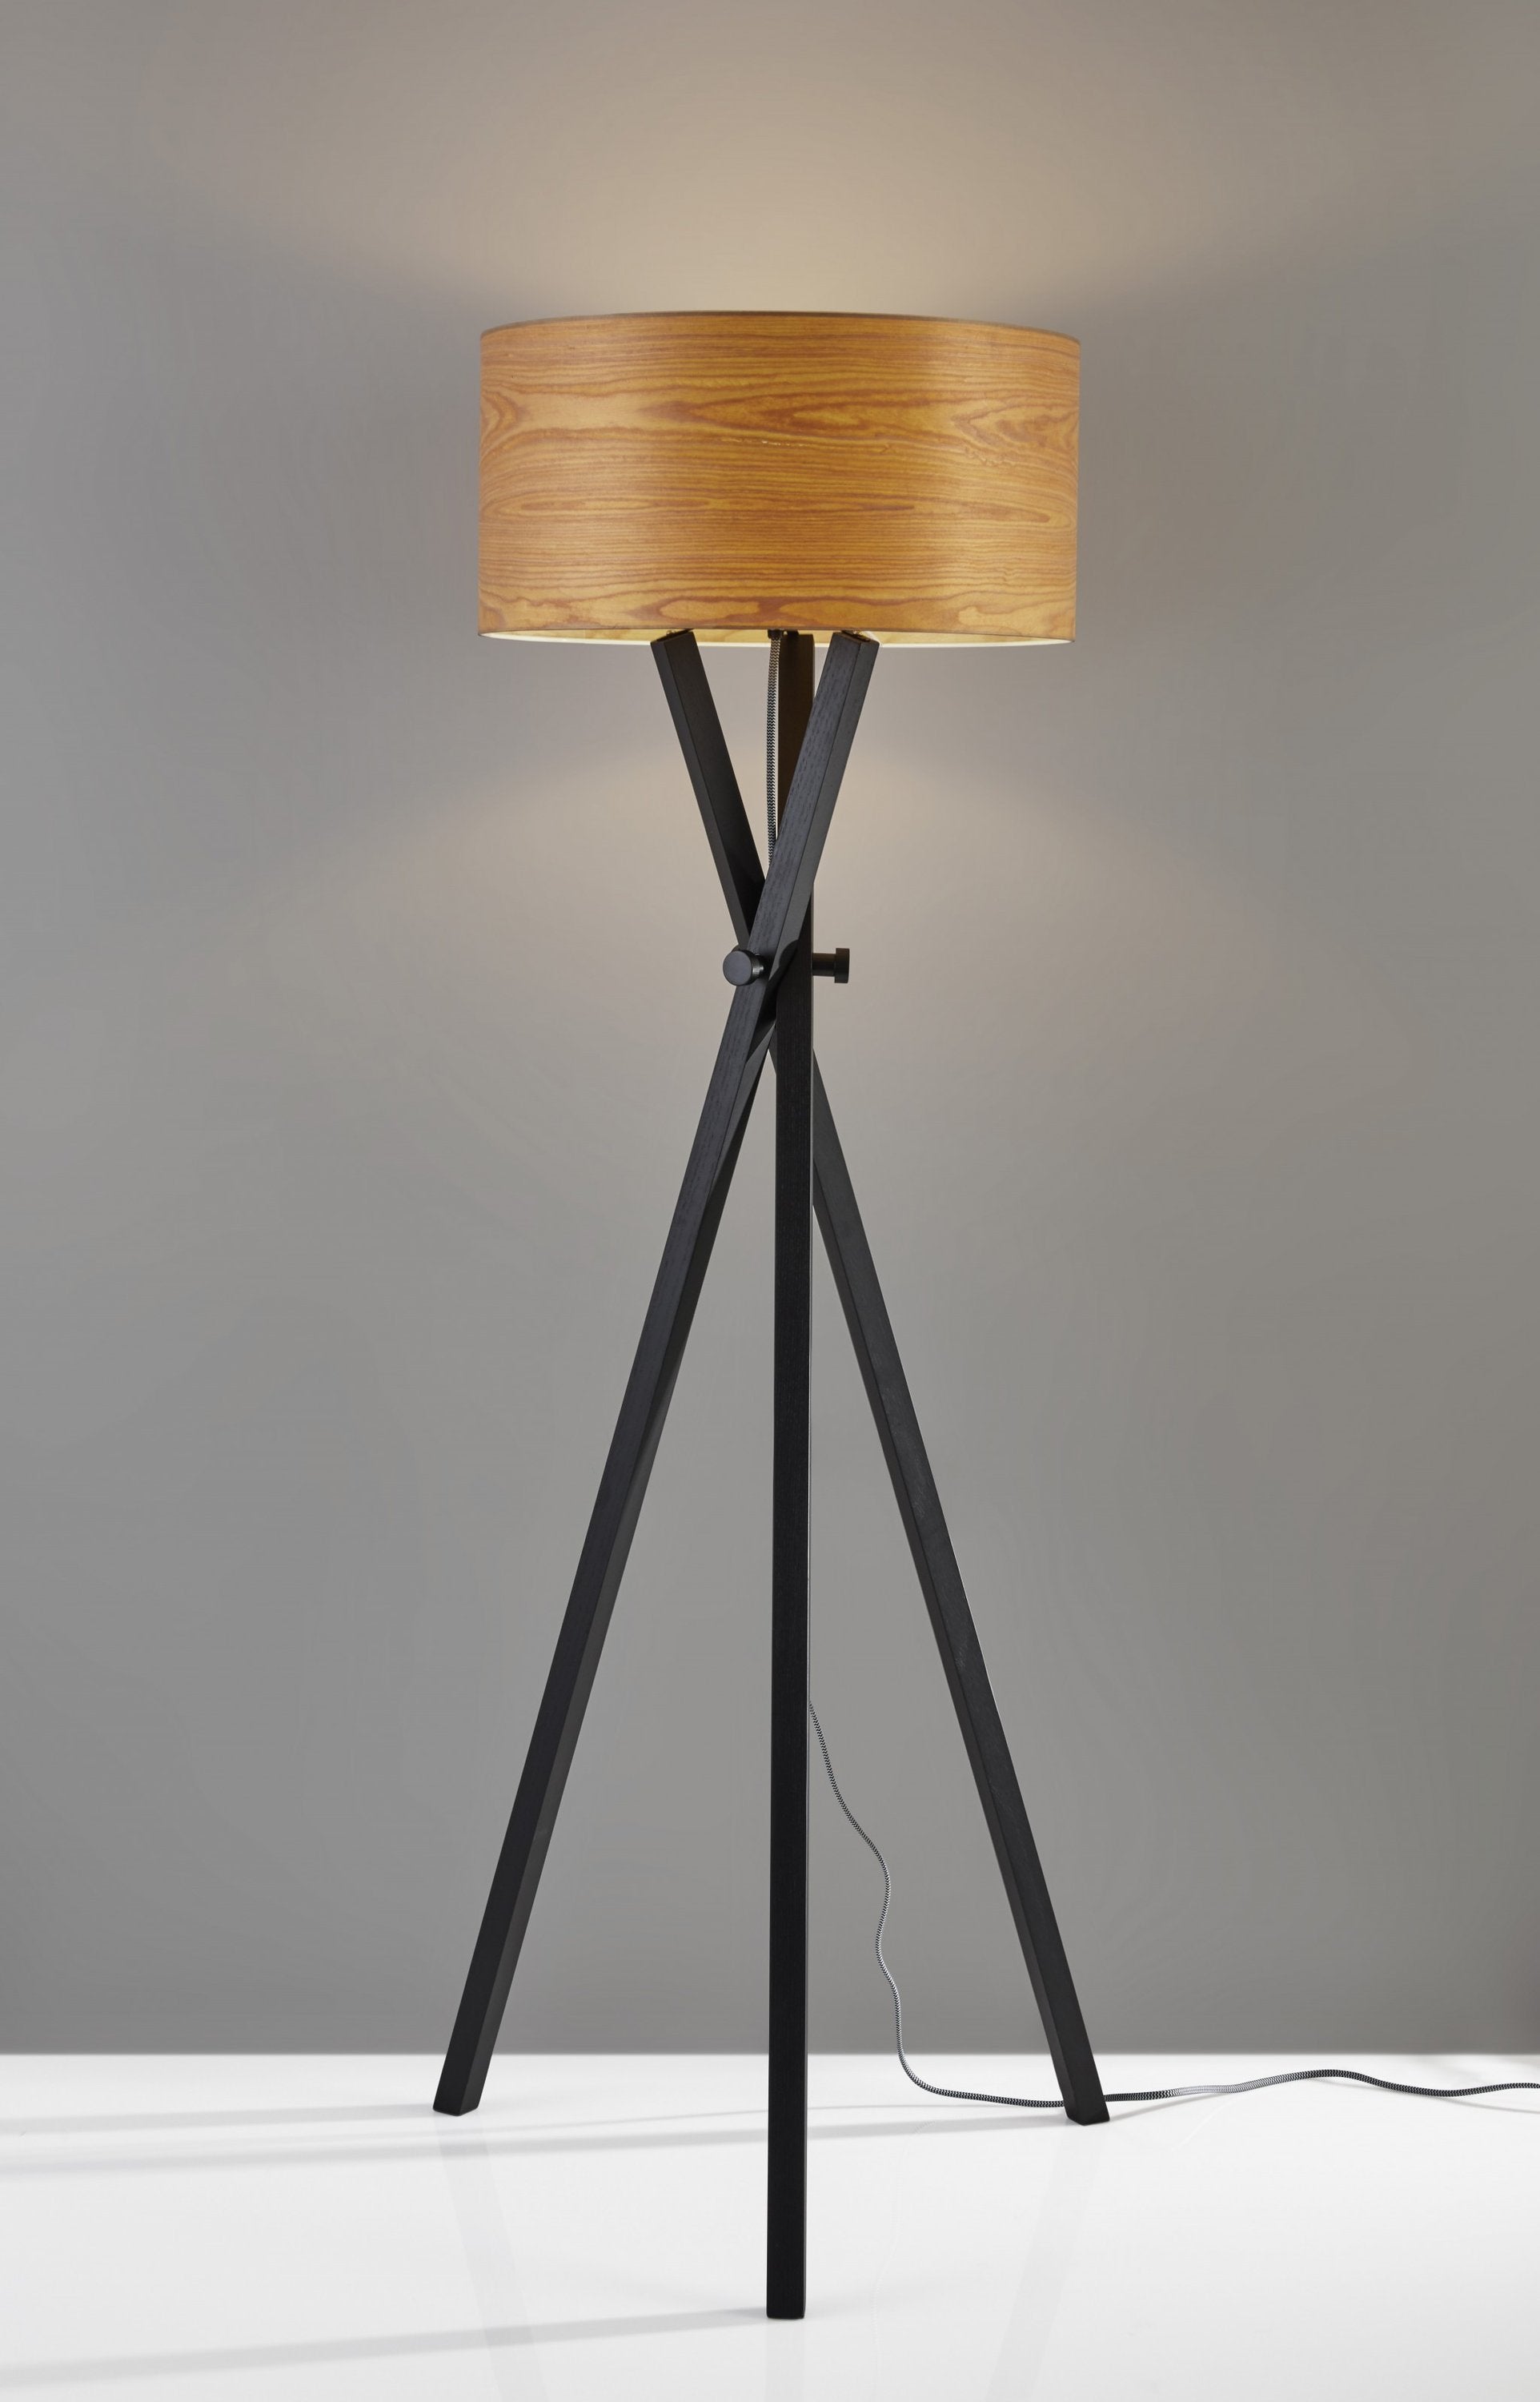 Architectonic Black Wood Tripod Floor Lamp with Rustic Wood Grain